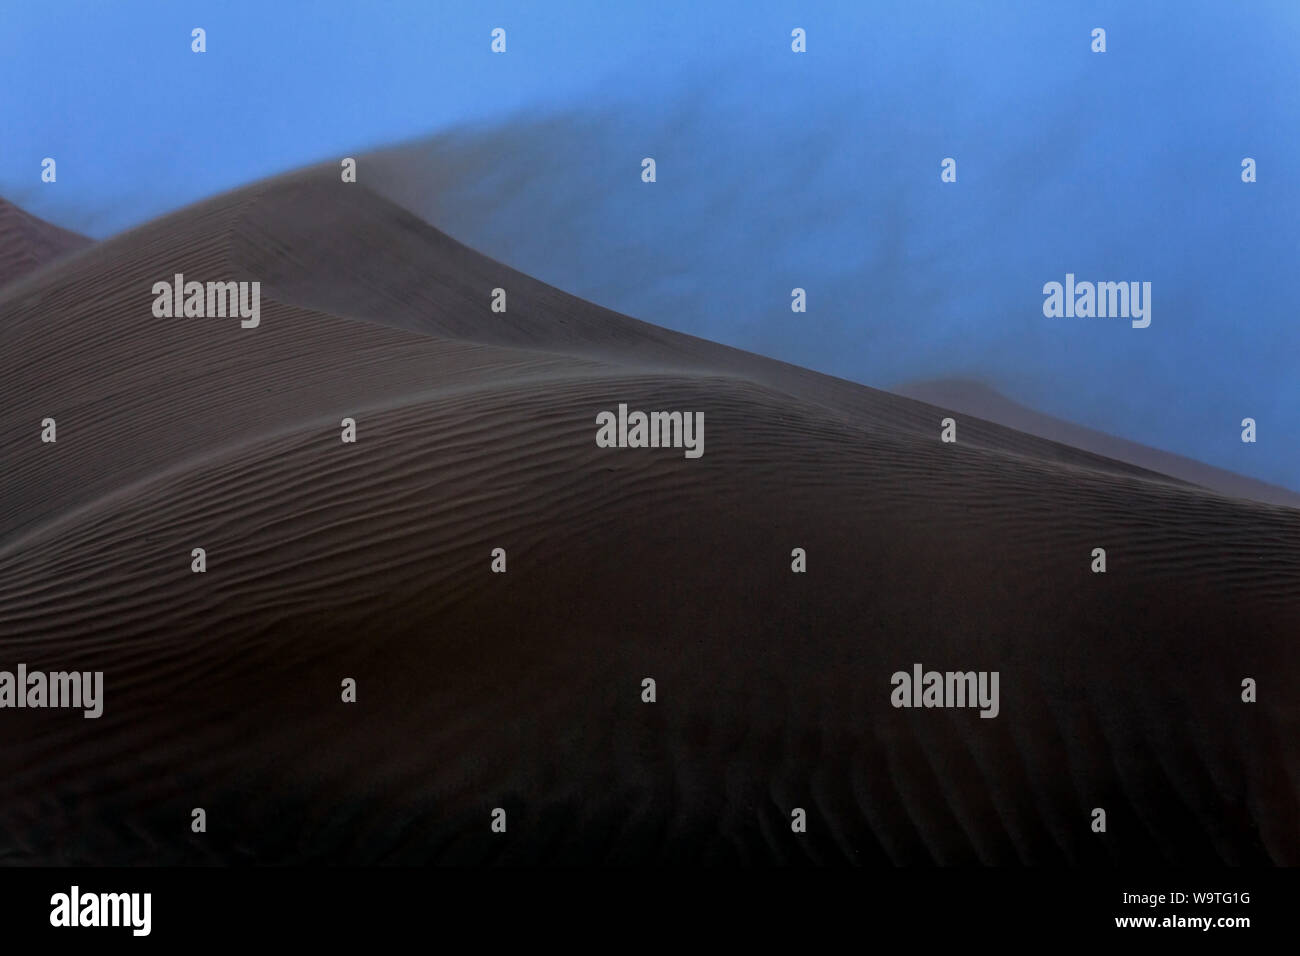 Sand storm in the desert, Riyadh, Saudi Arabia Stock Photo